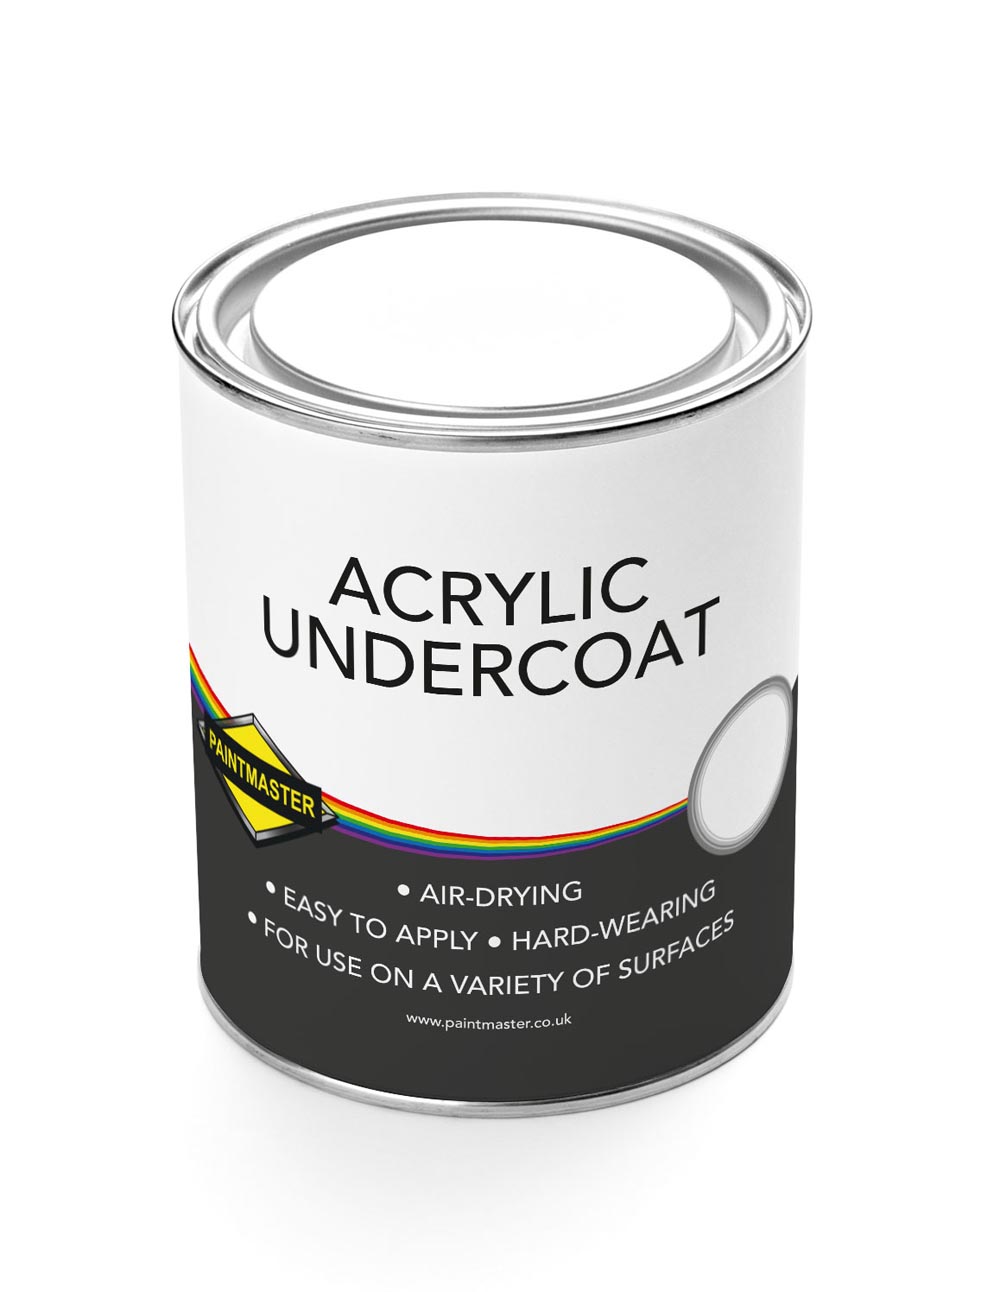 Acrylic Undercoat - Paintmaster